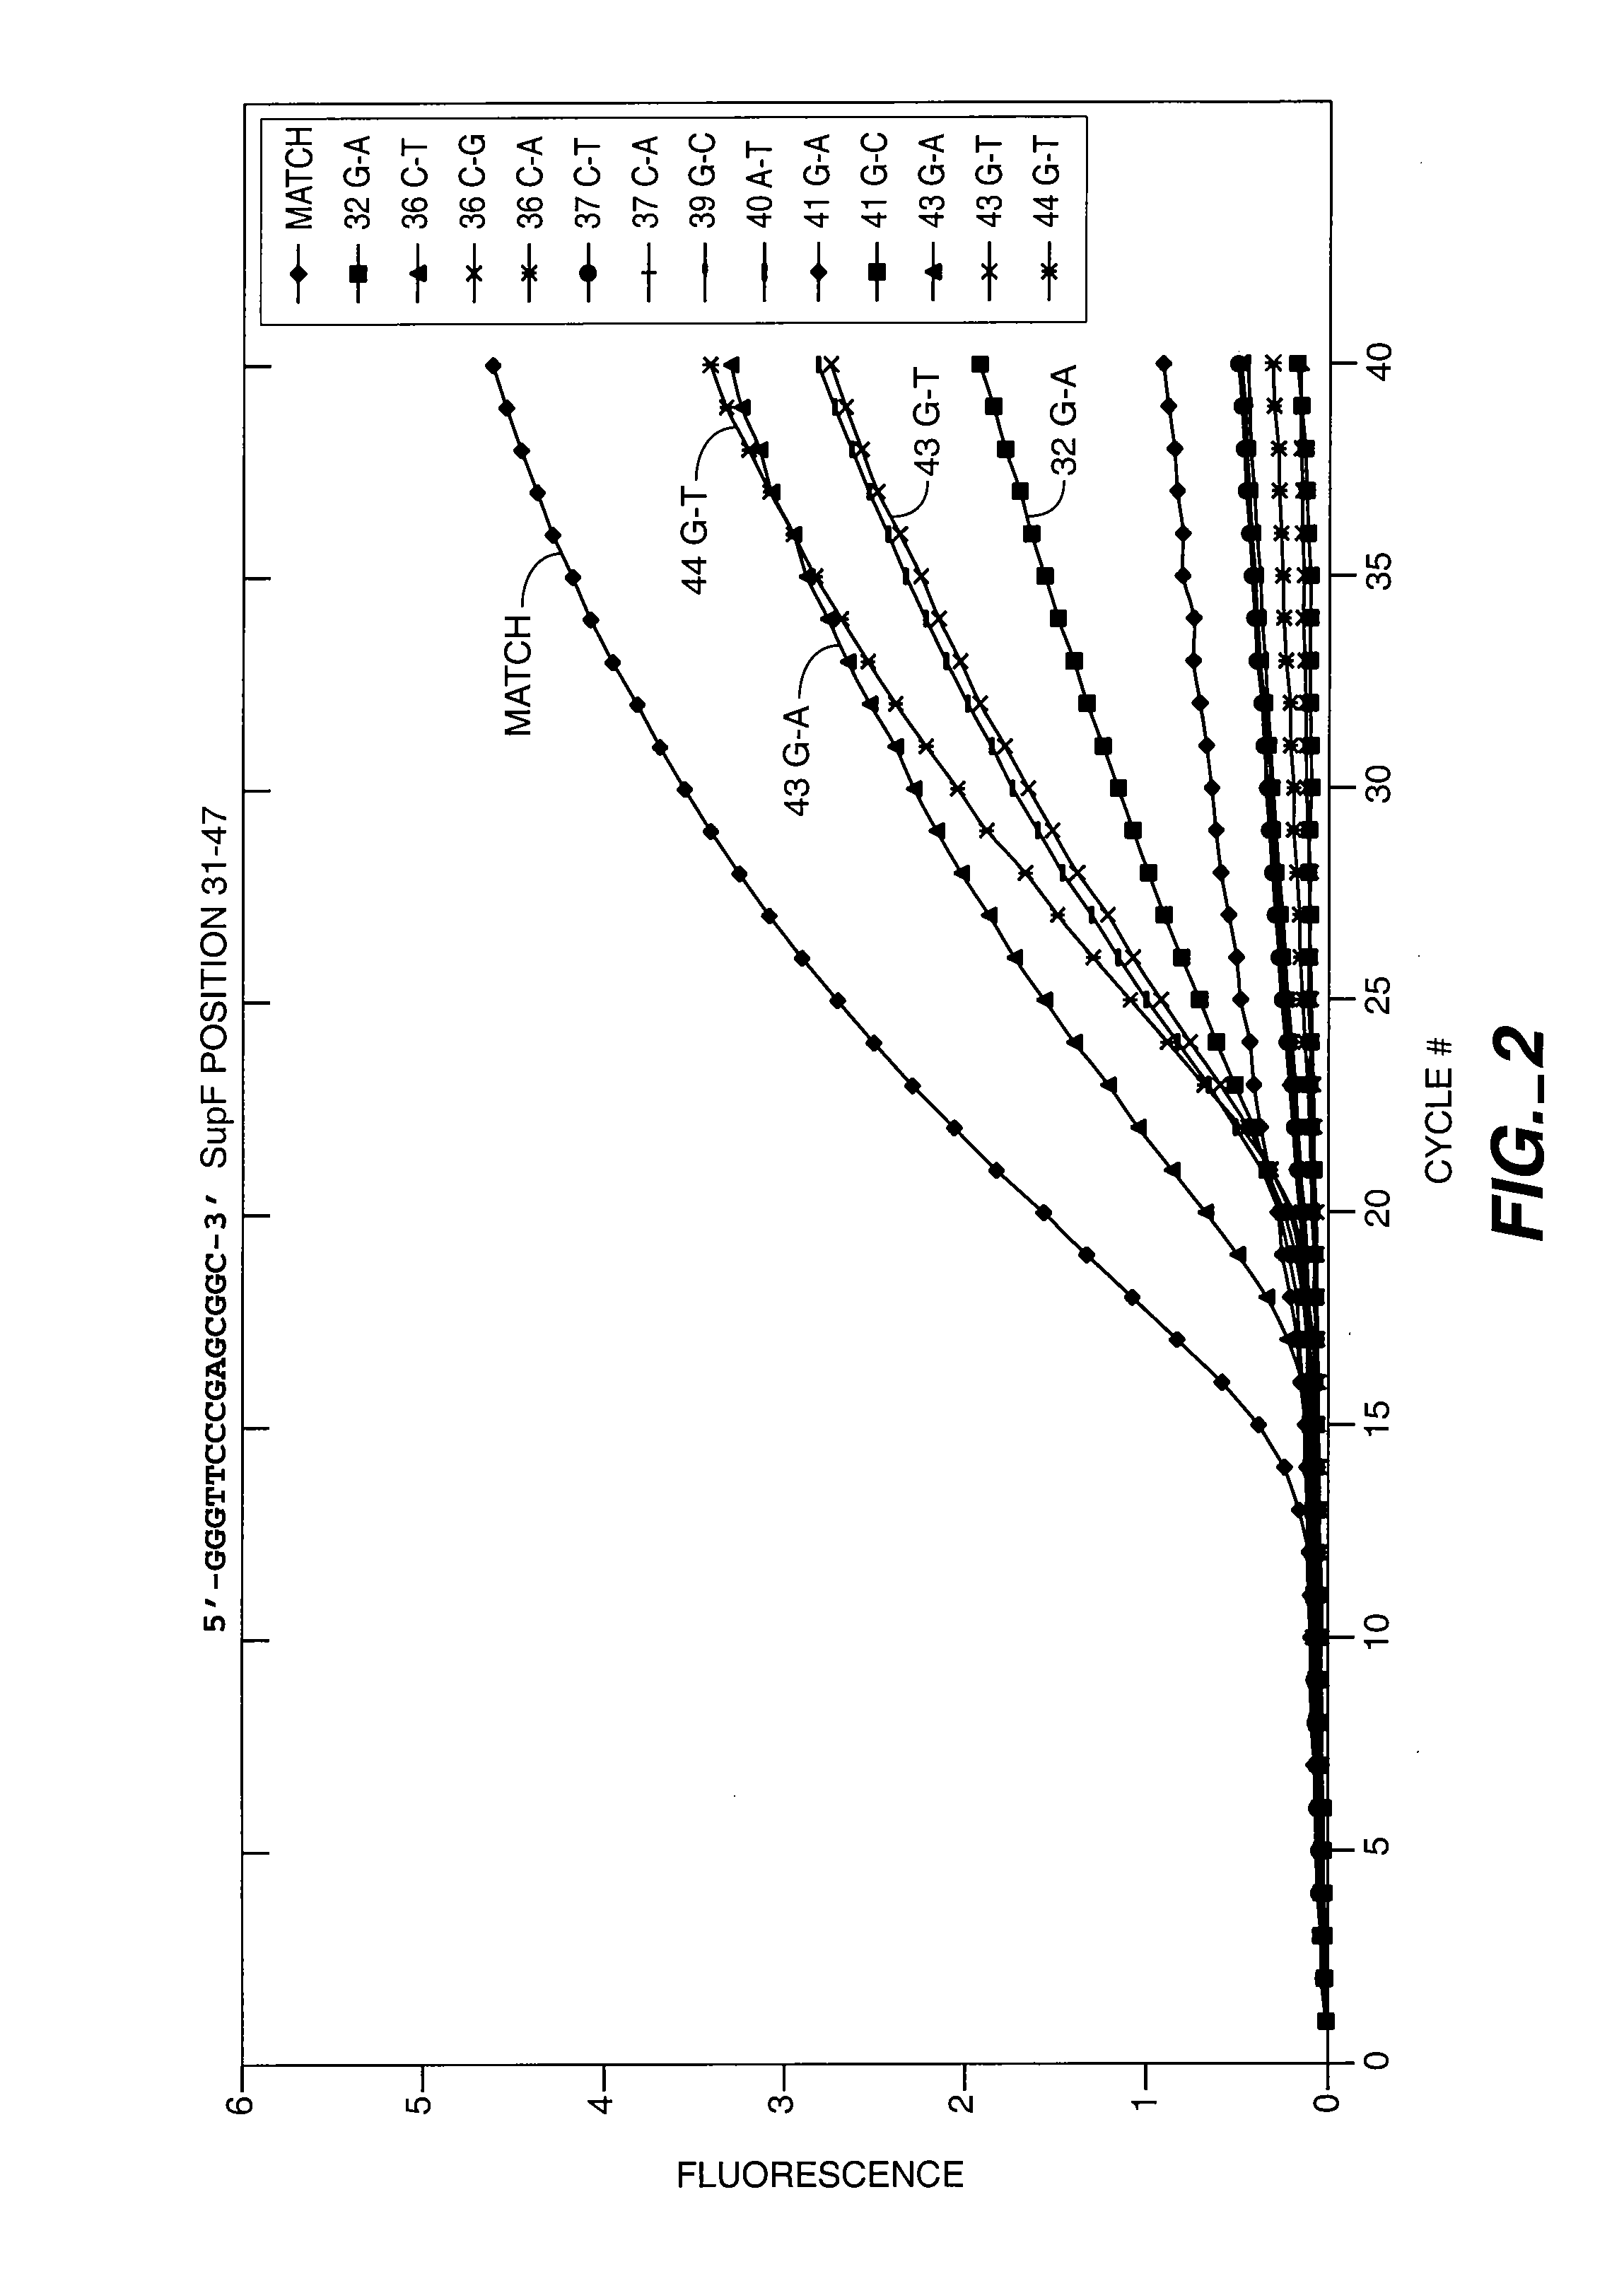 Oligonucleotides containing pyrazolo[3,4-d] pyrimidines for hybridization and mismatch discrimination